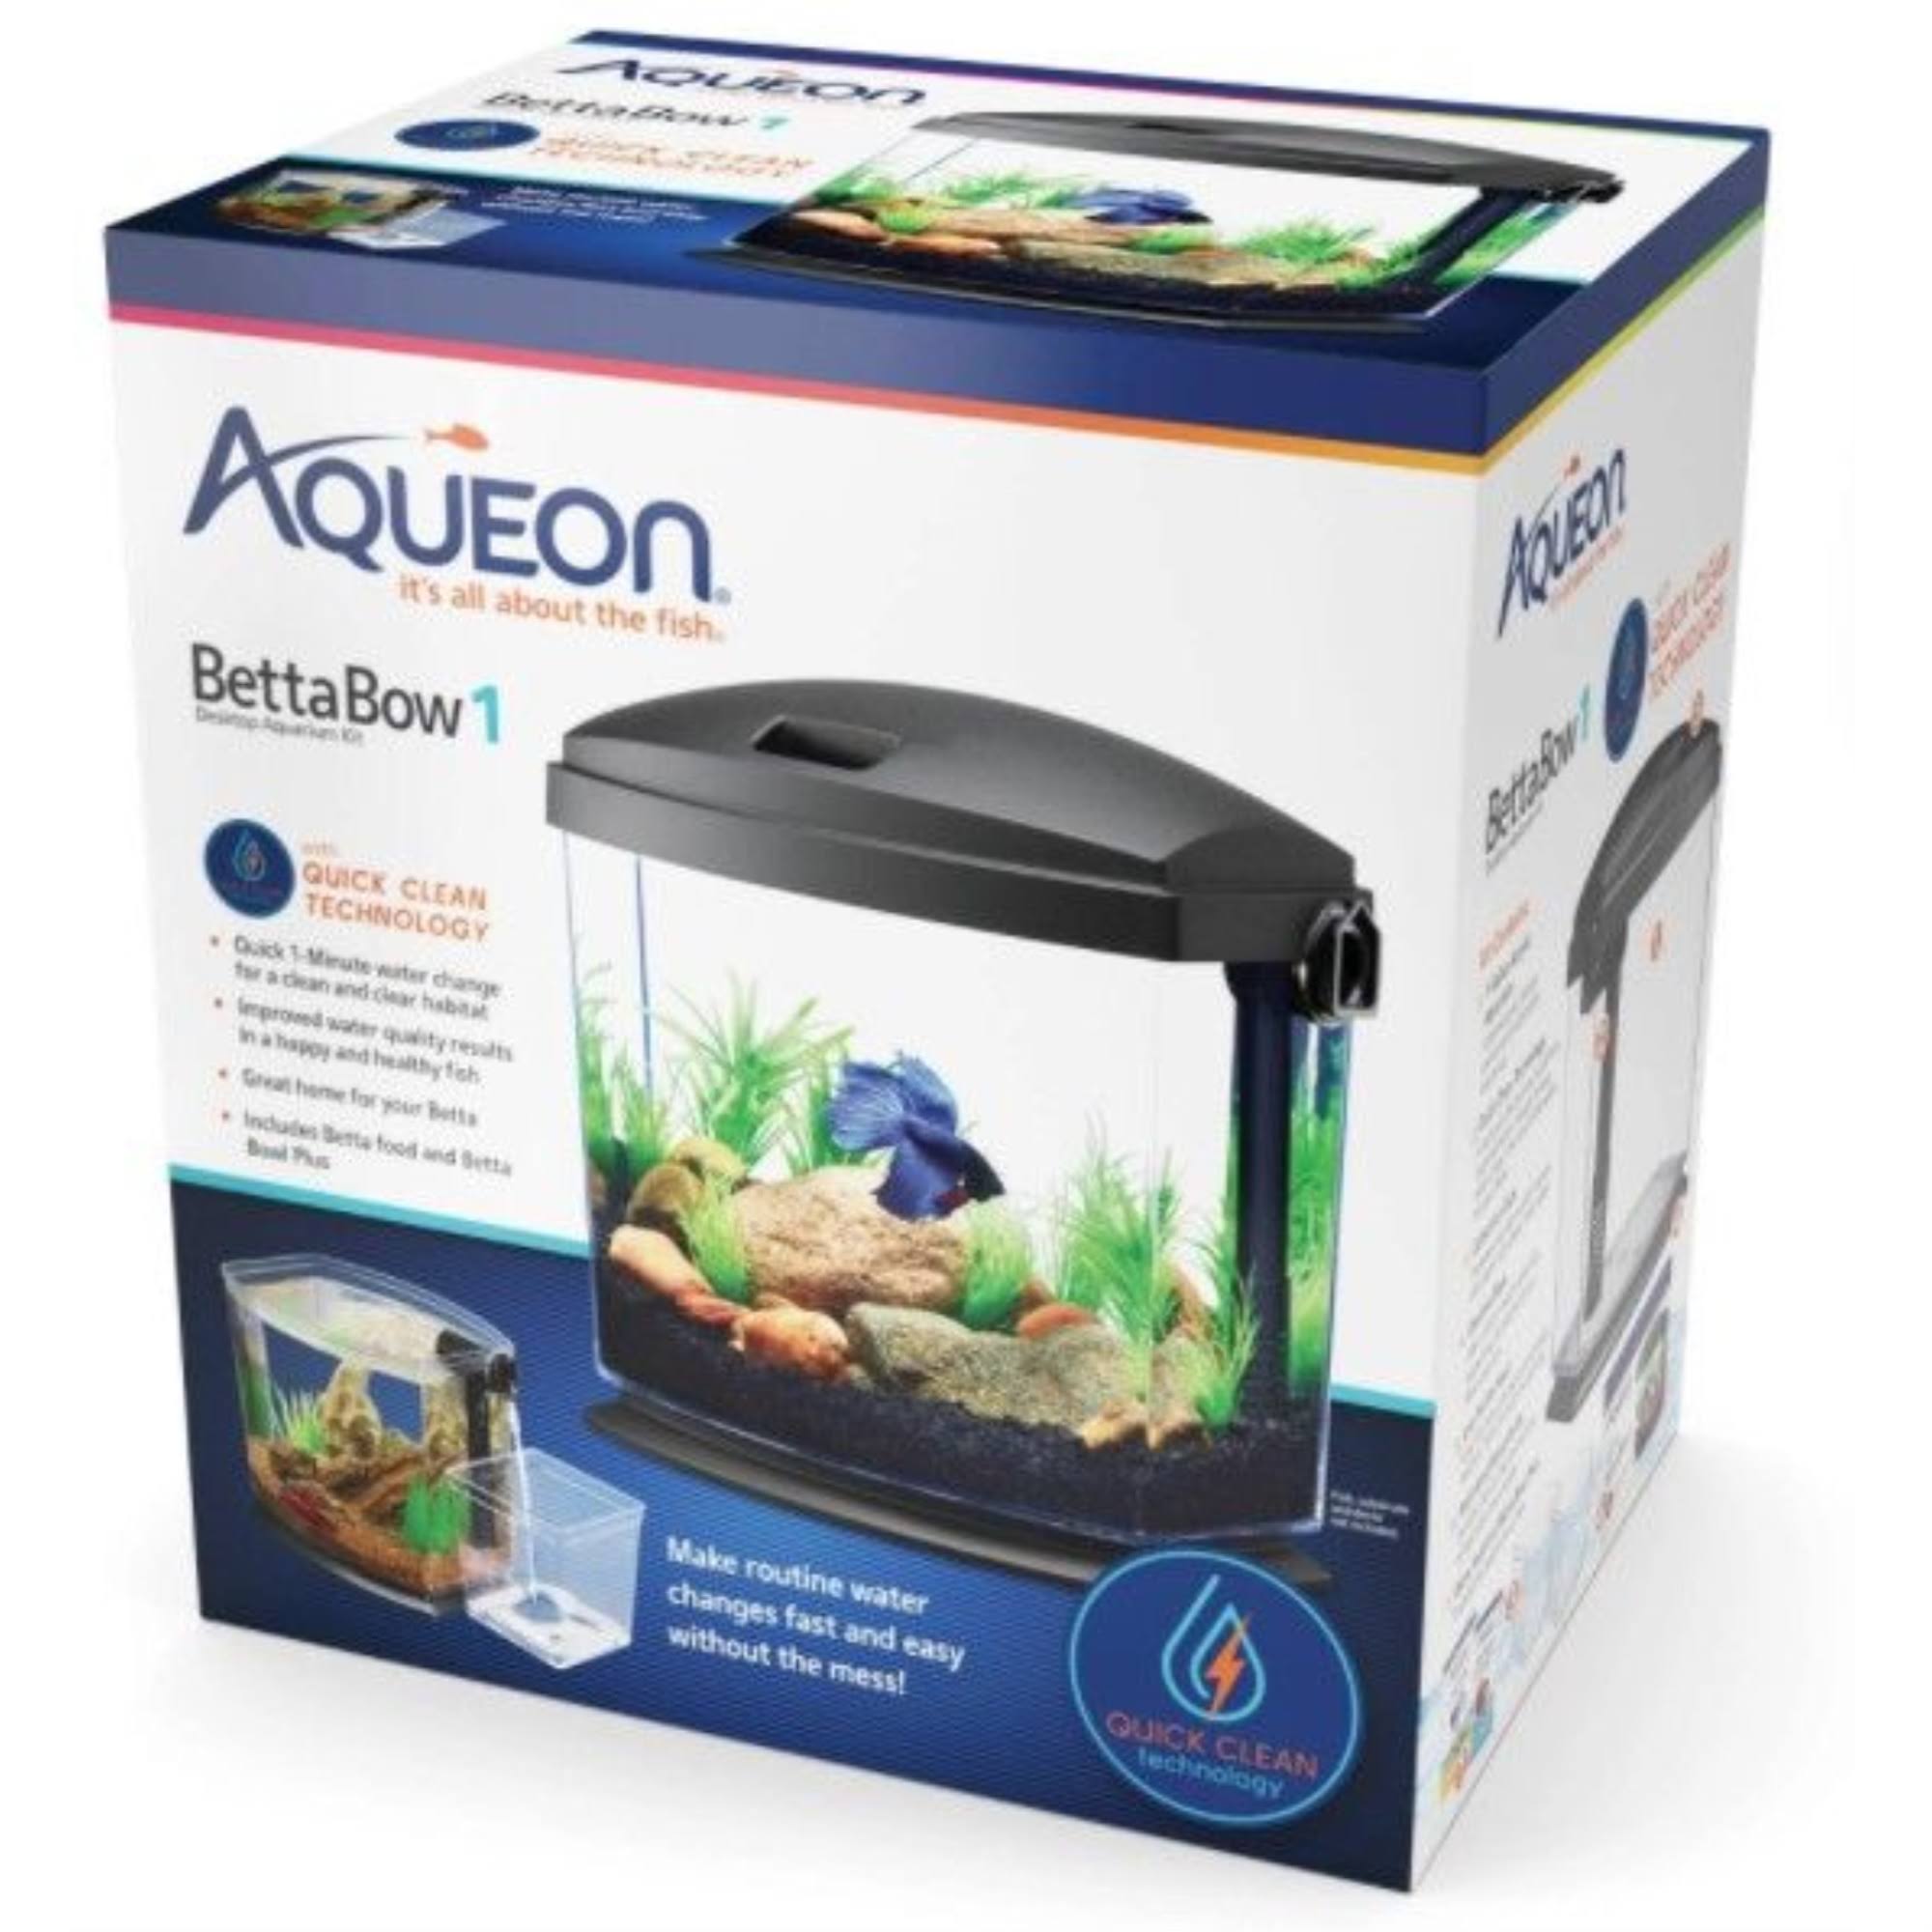 Aqueon BettaBow 1 with Quick Clean Technology Aquarum Kit Black - 1 Gallon